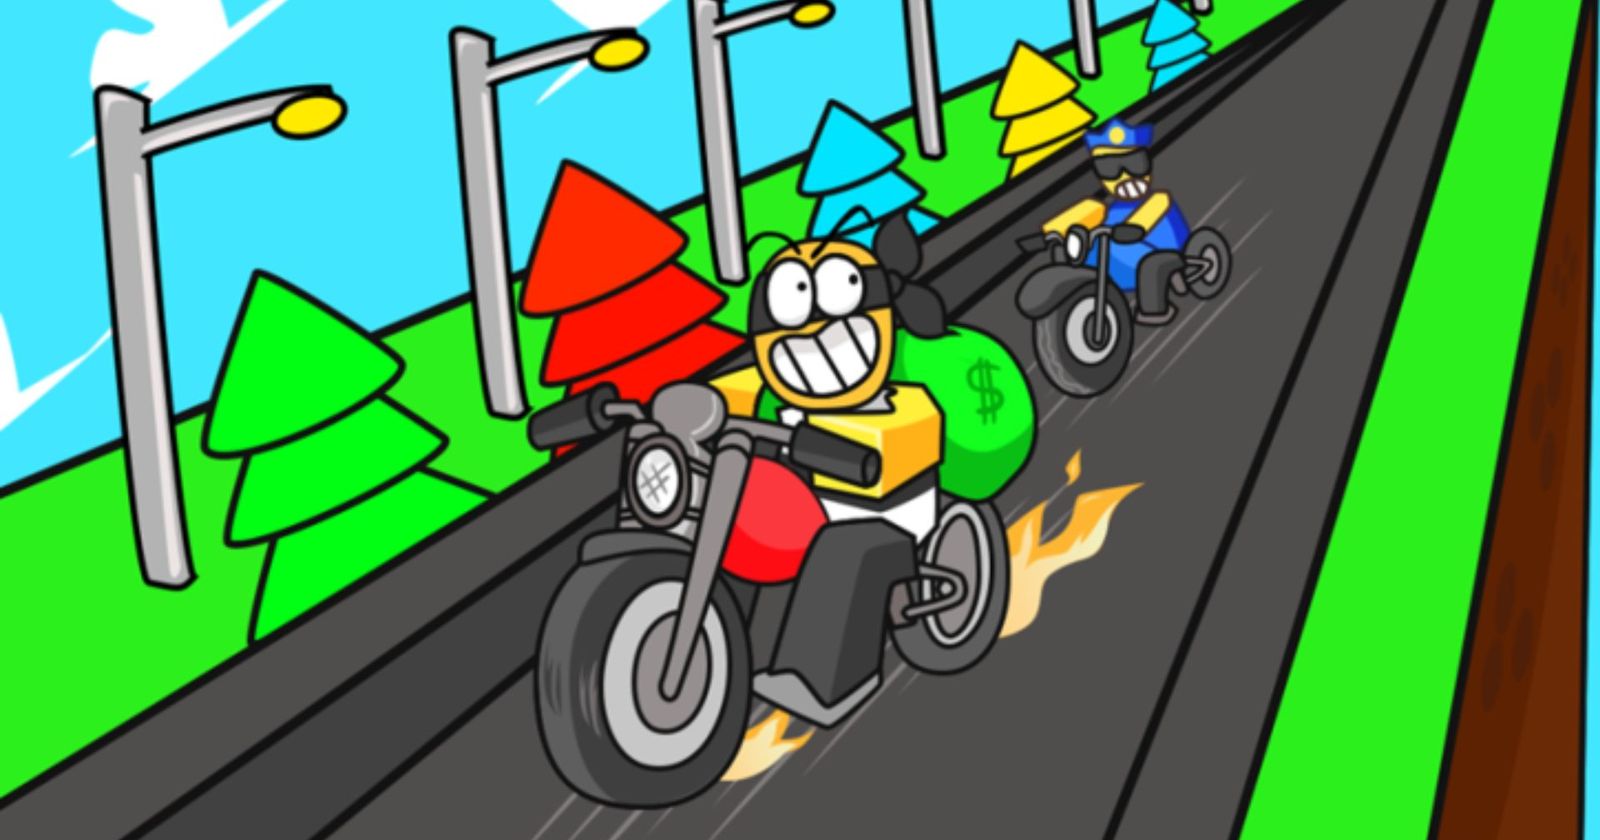 Motorcycle Race Codes (December 2023) - Prima Games